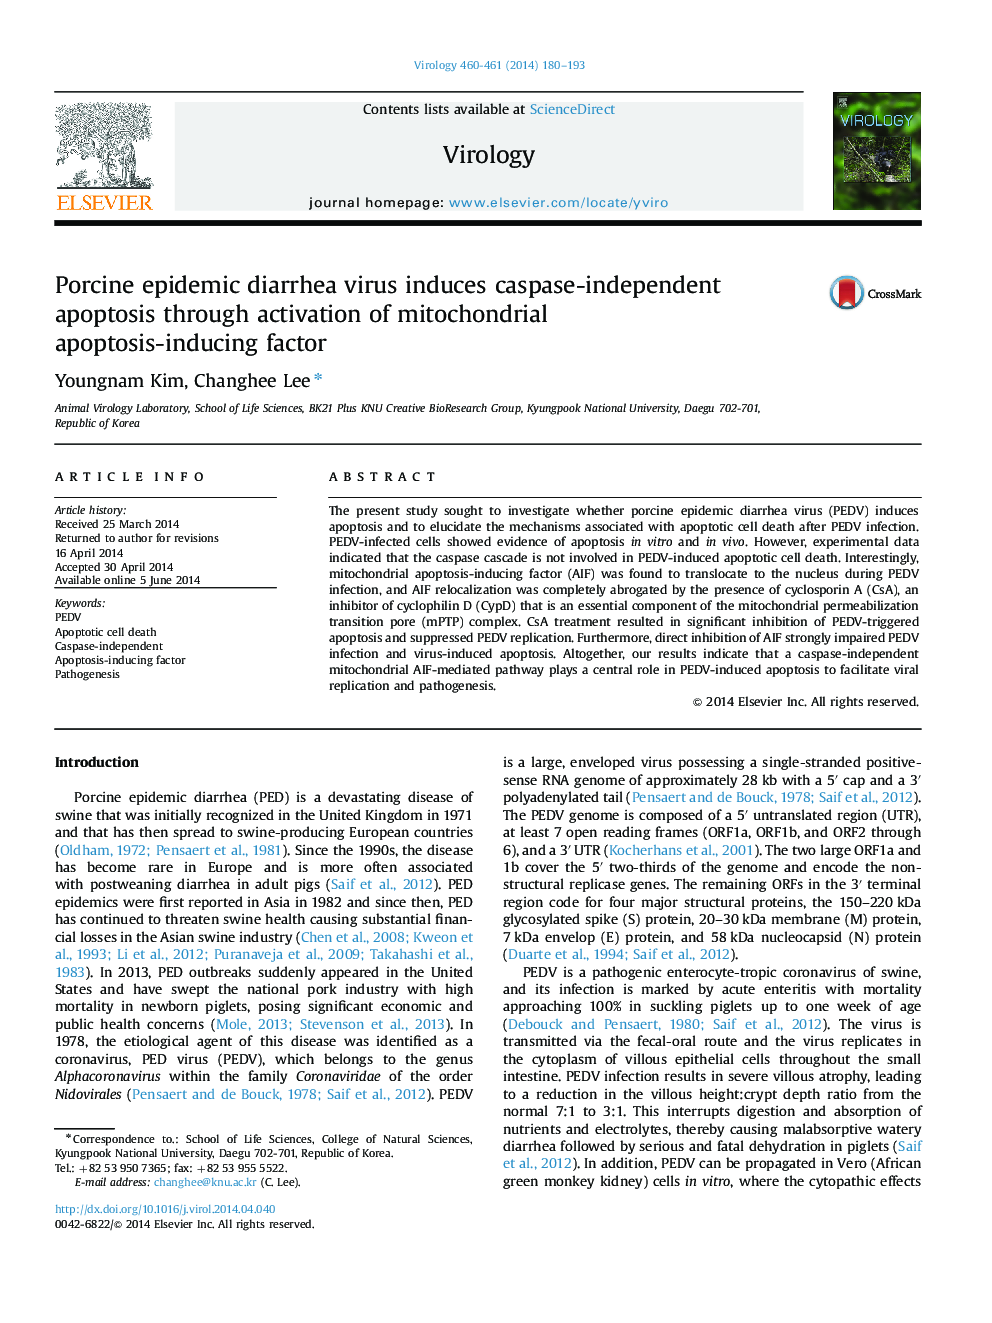 Porcine epidemic diarrhea virus induces caspase-independent apoptosis through activation of mitochondrial apoptosis-inducing factor